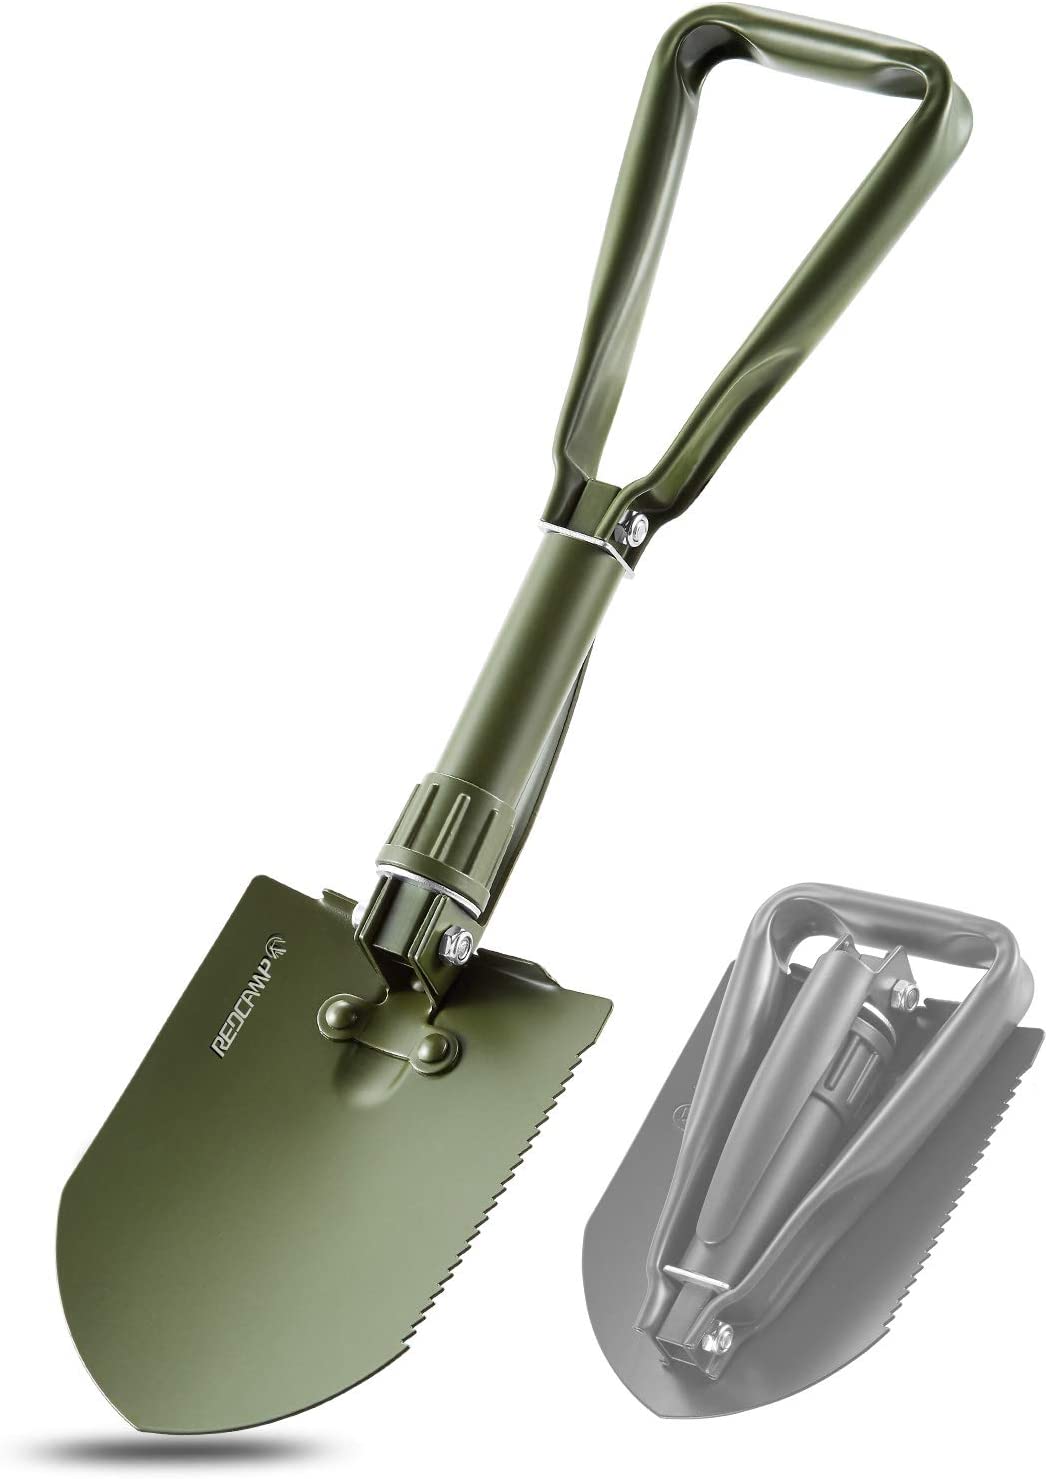 REDCAMP Military Folding Camping Entrenching Shovel